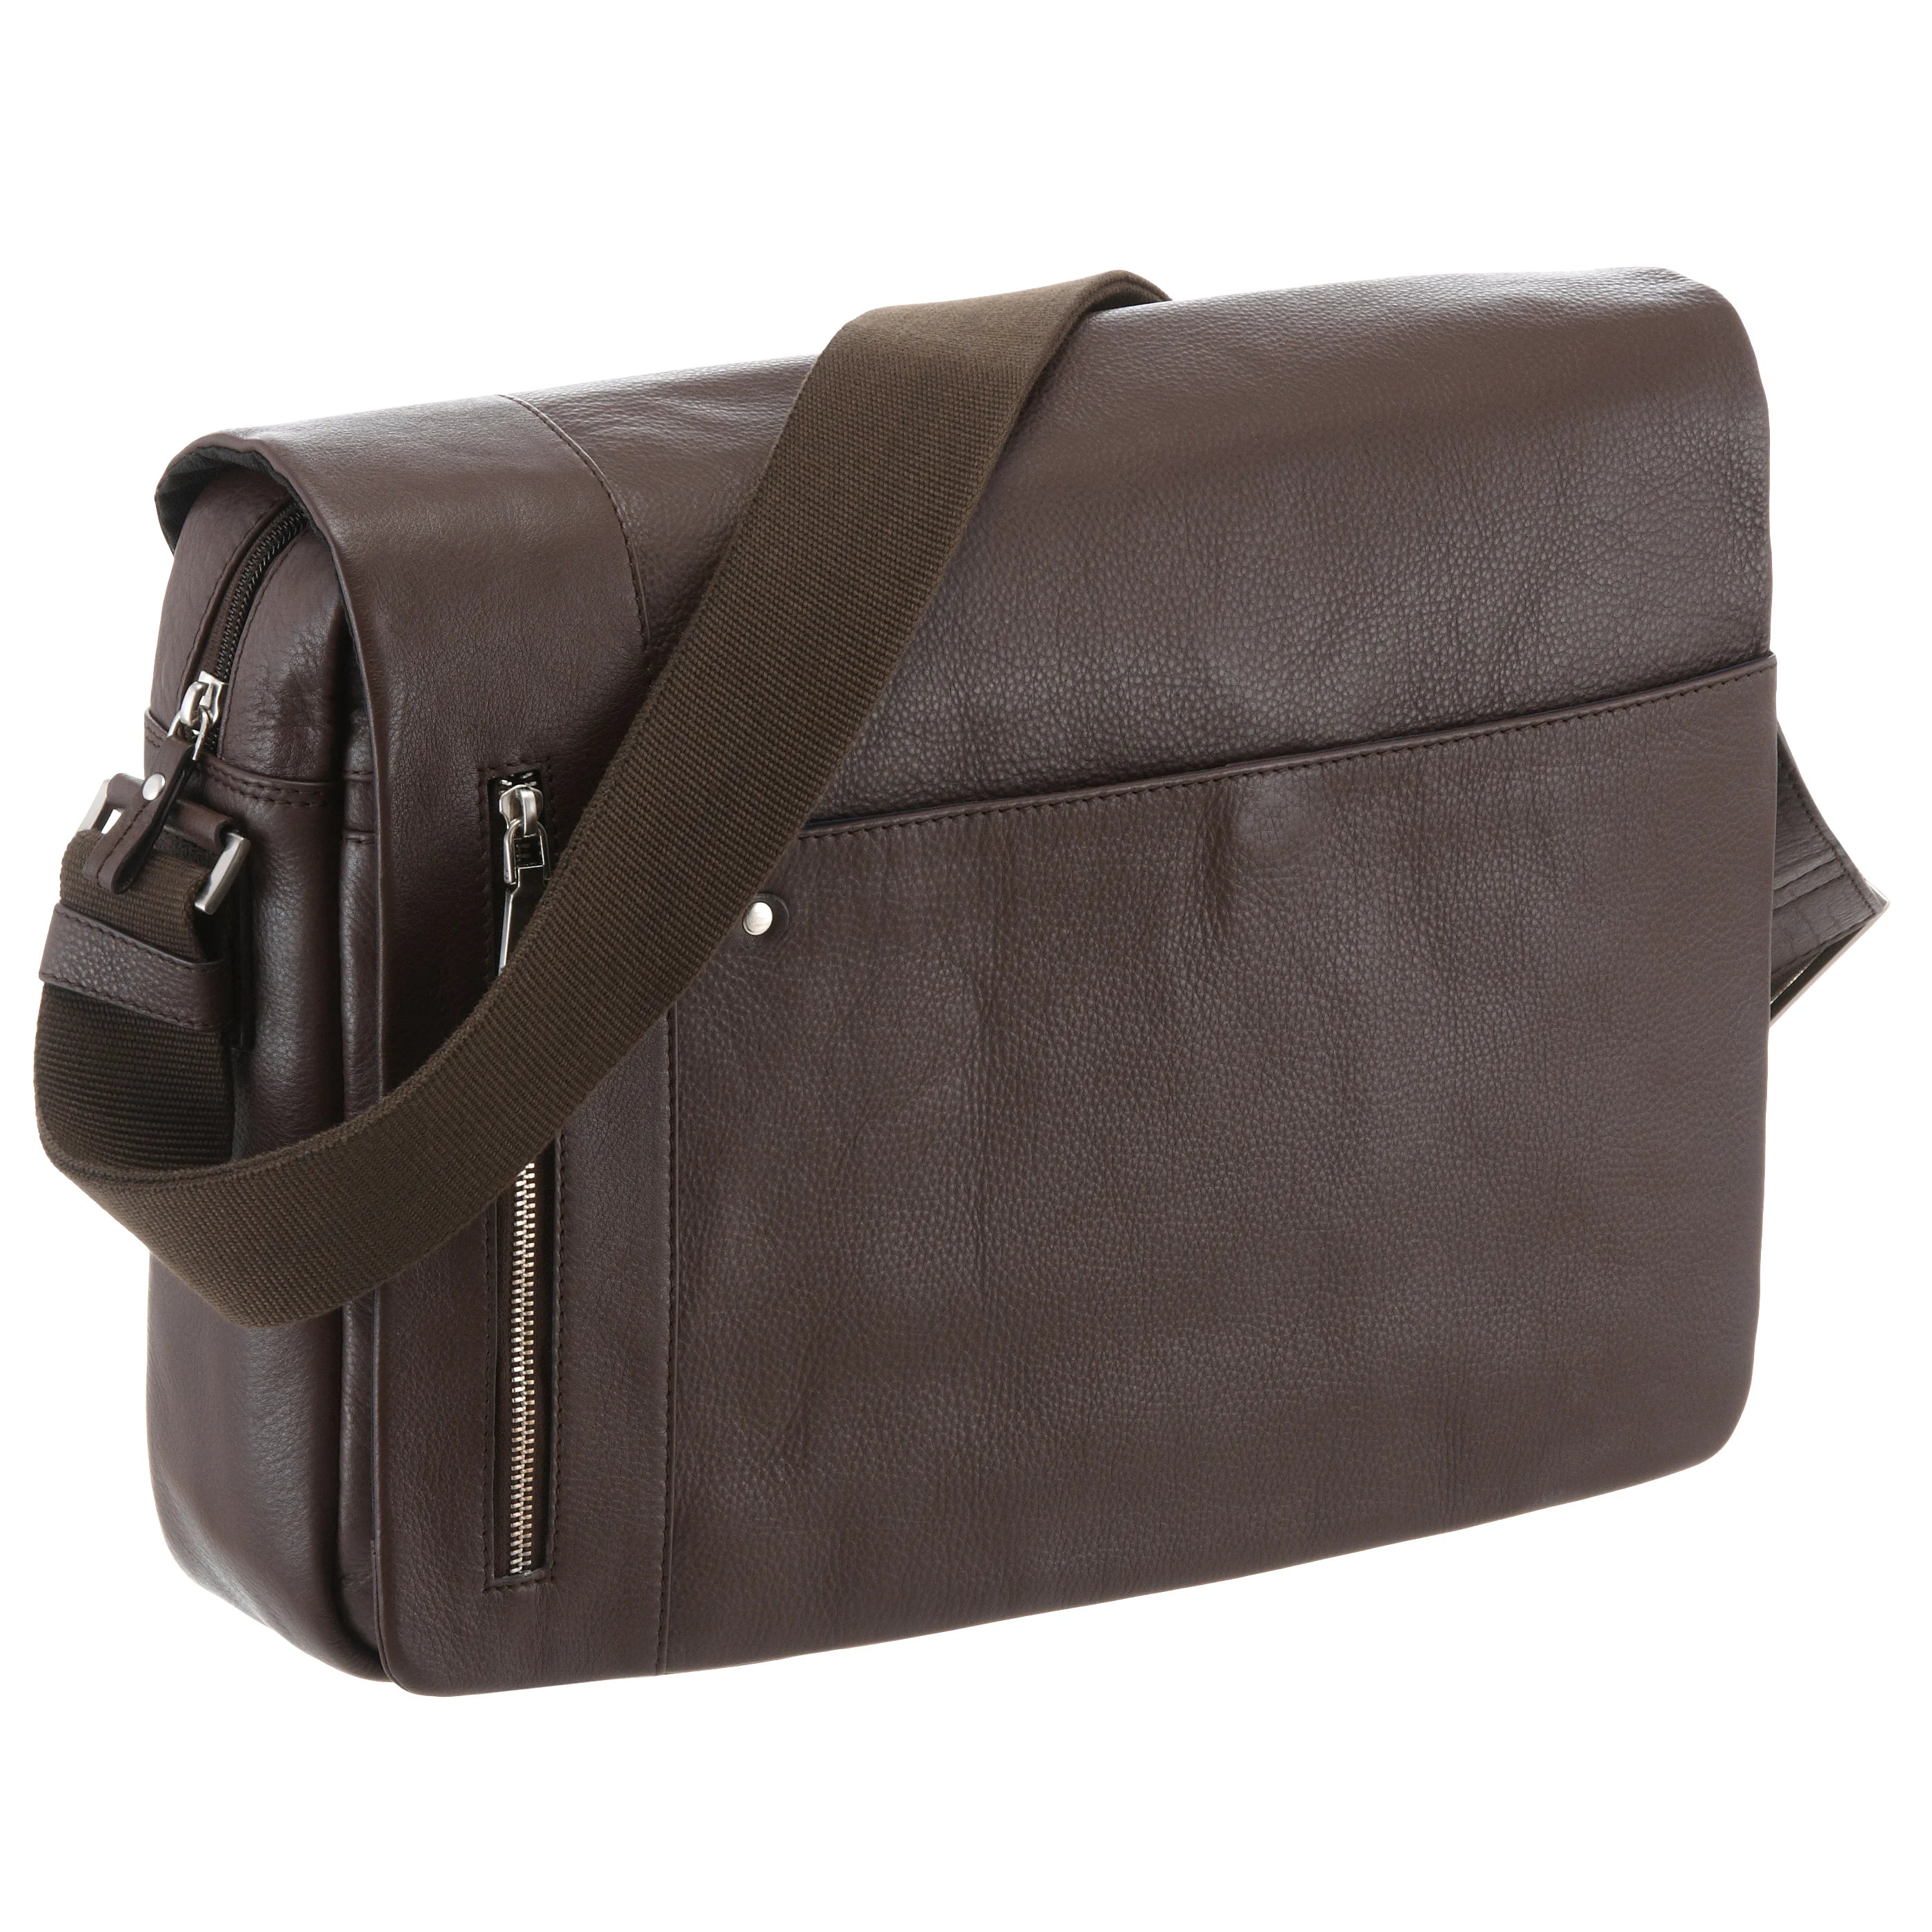 Esquire Sydney Messenger Bag 40 cm - brown